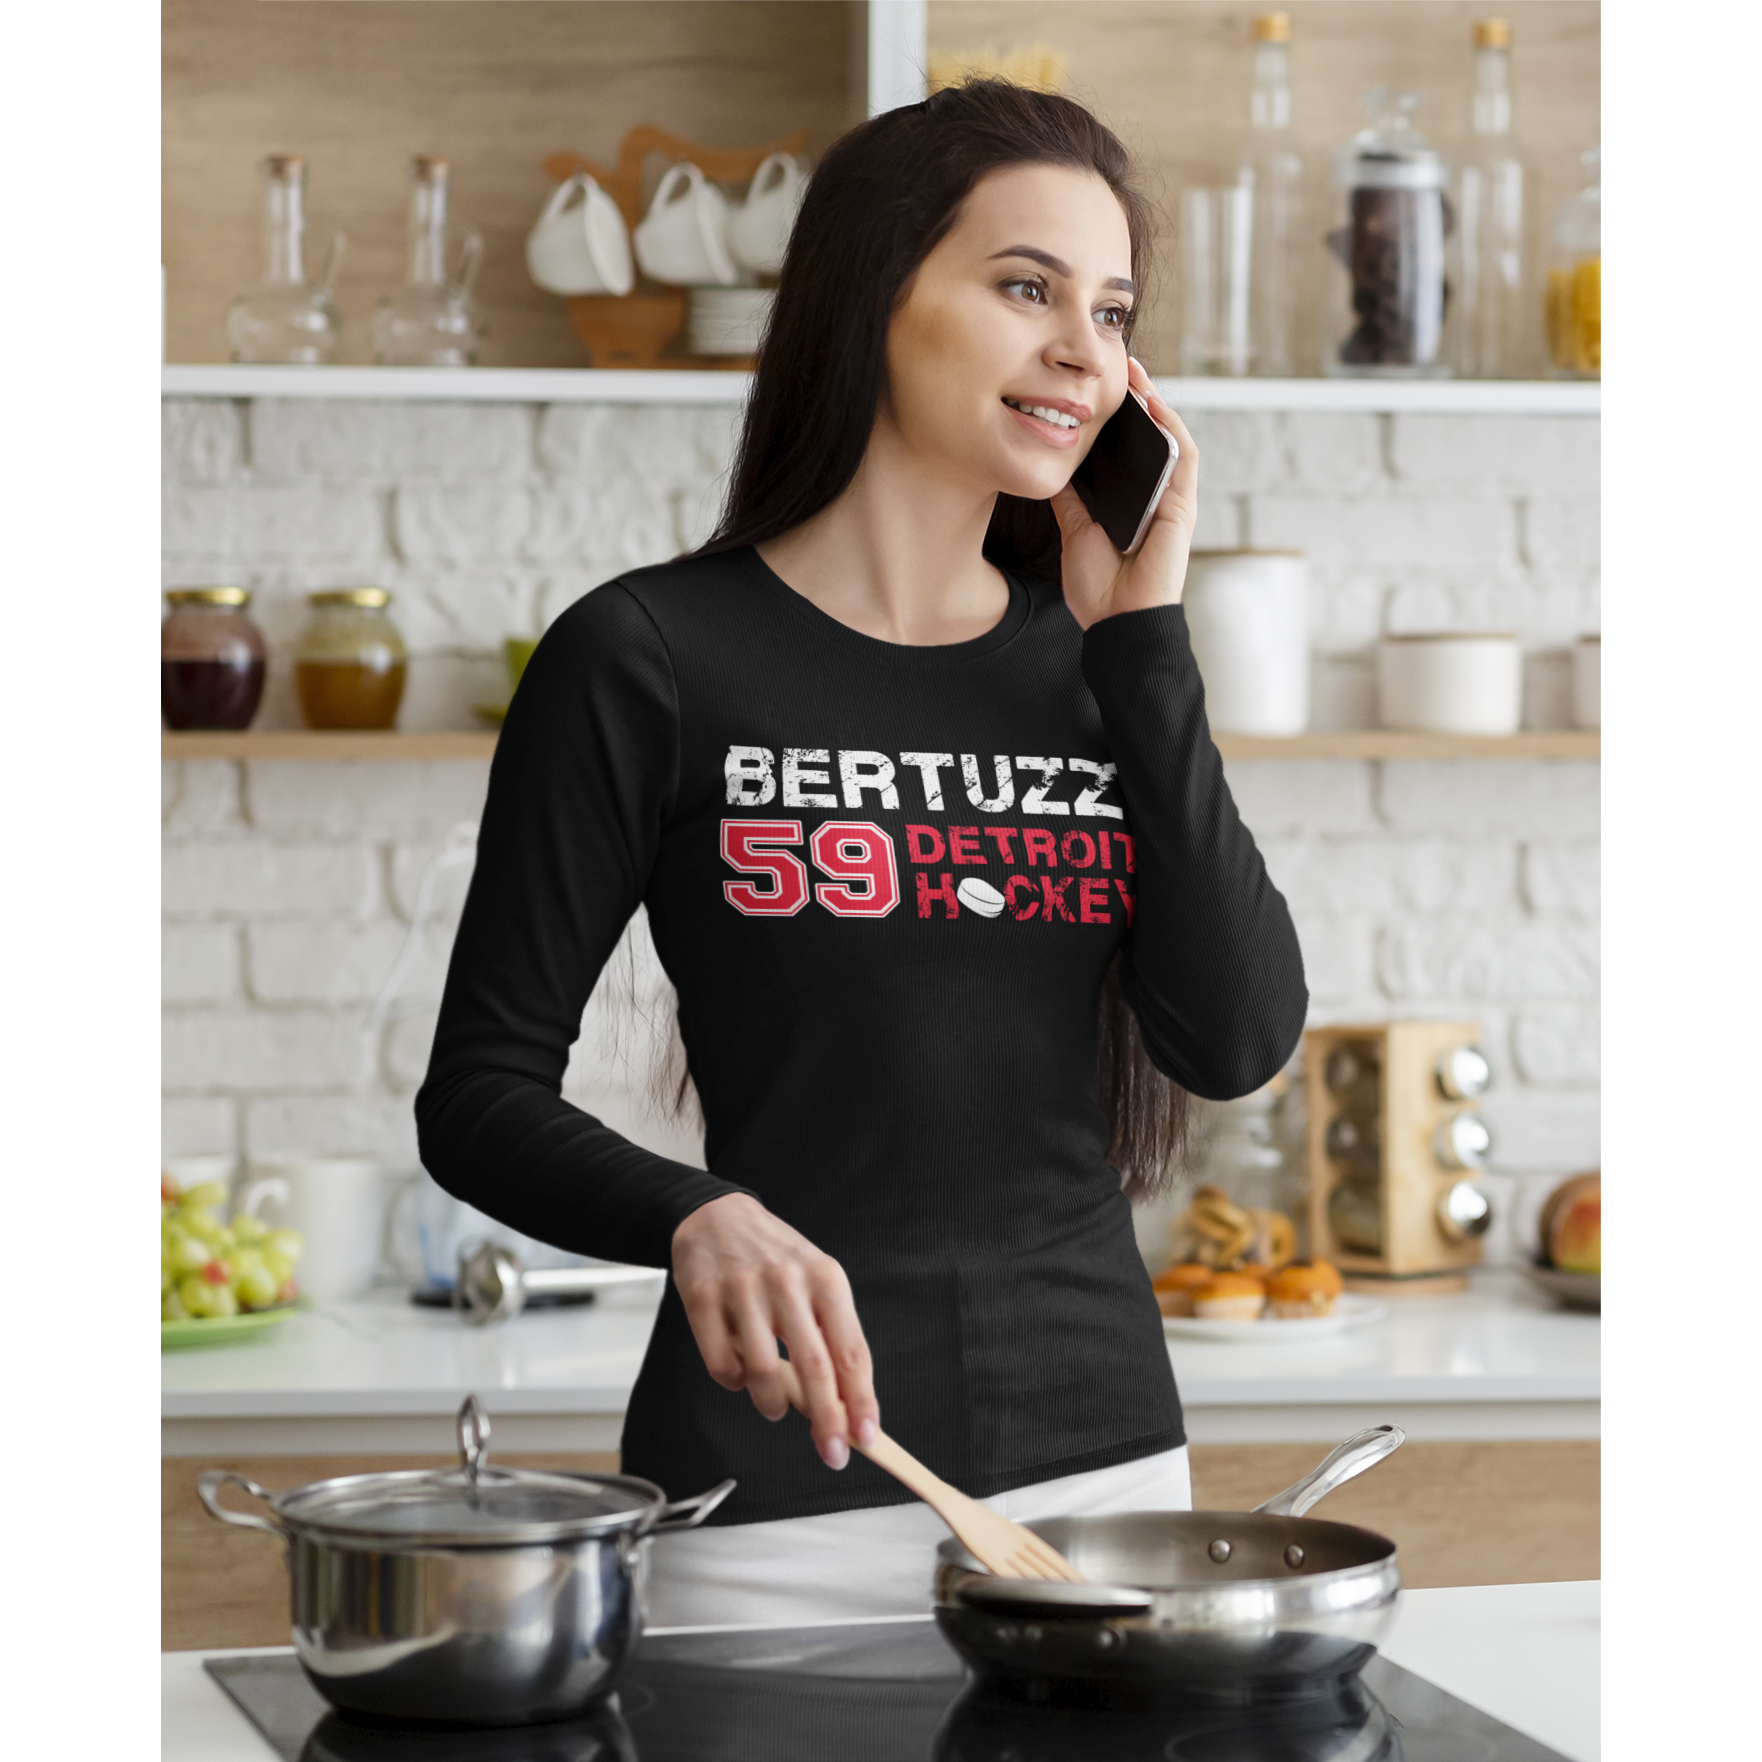 Bertuzzi 59 Detroit Hockey Unisex Jersey Long Sleeve Shirt